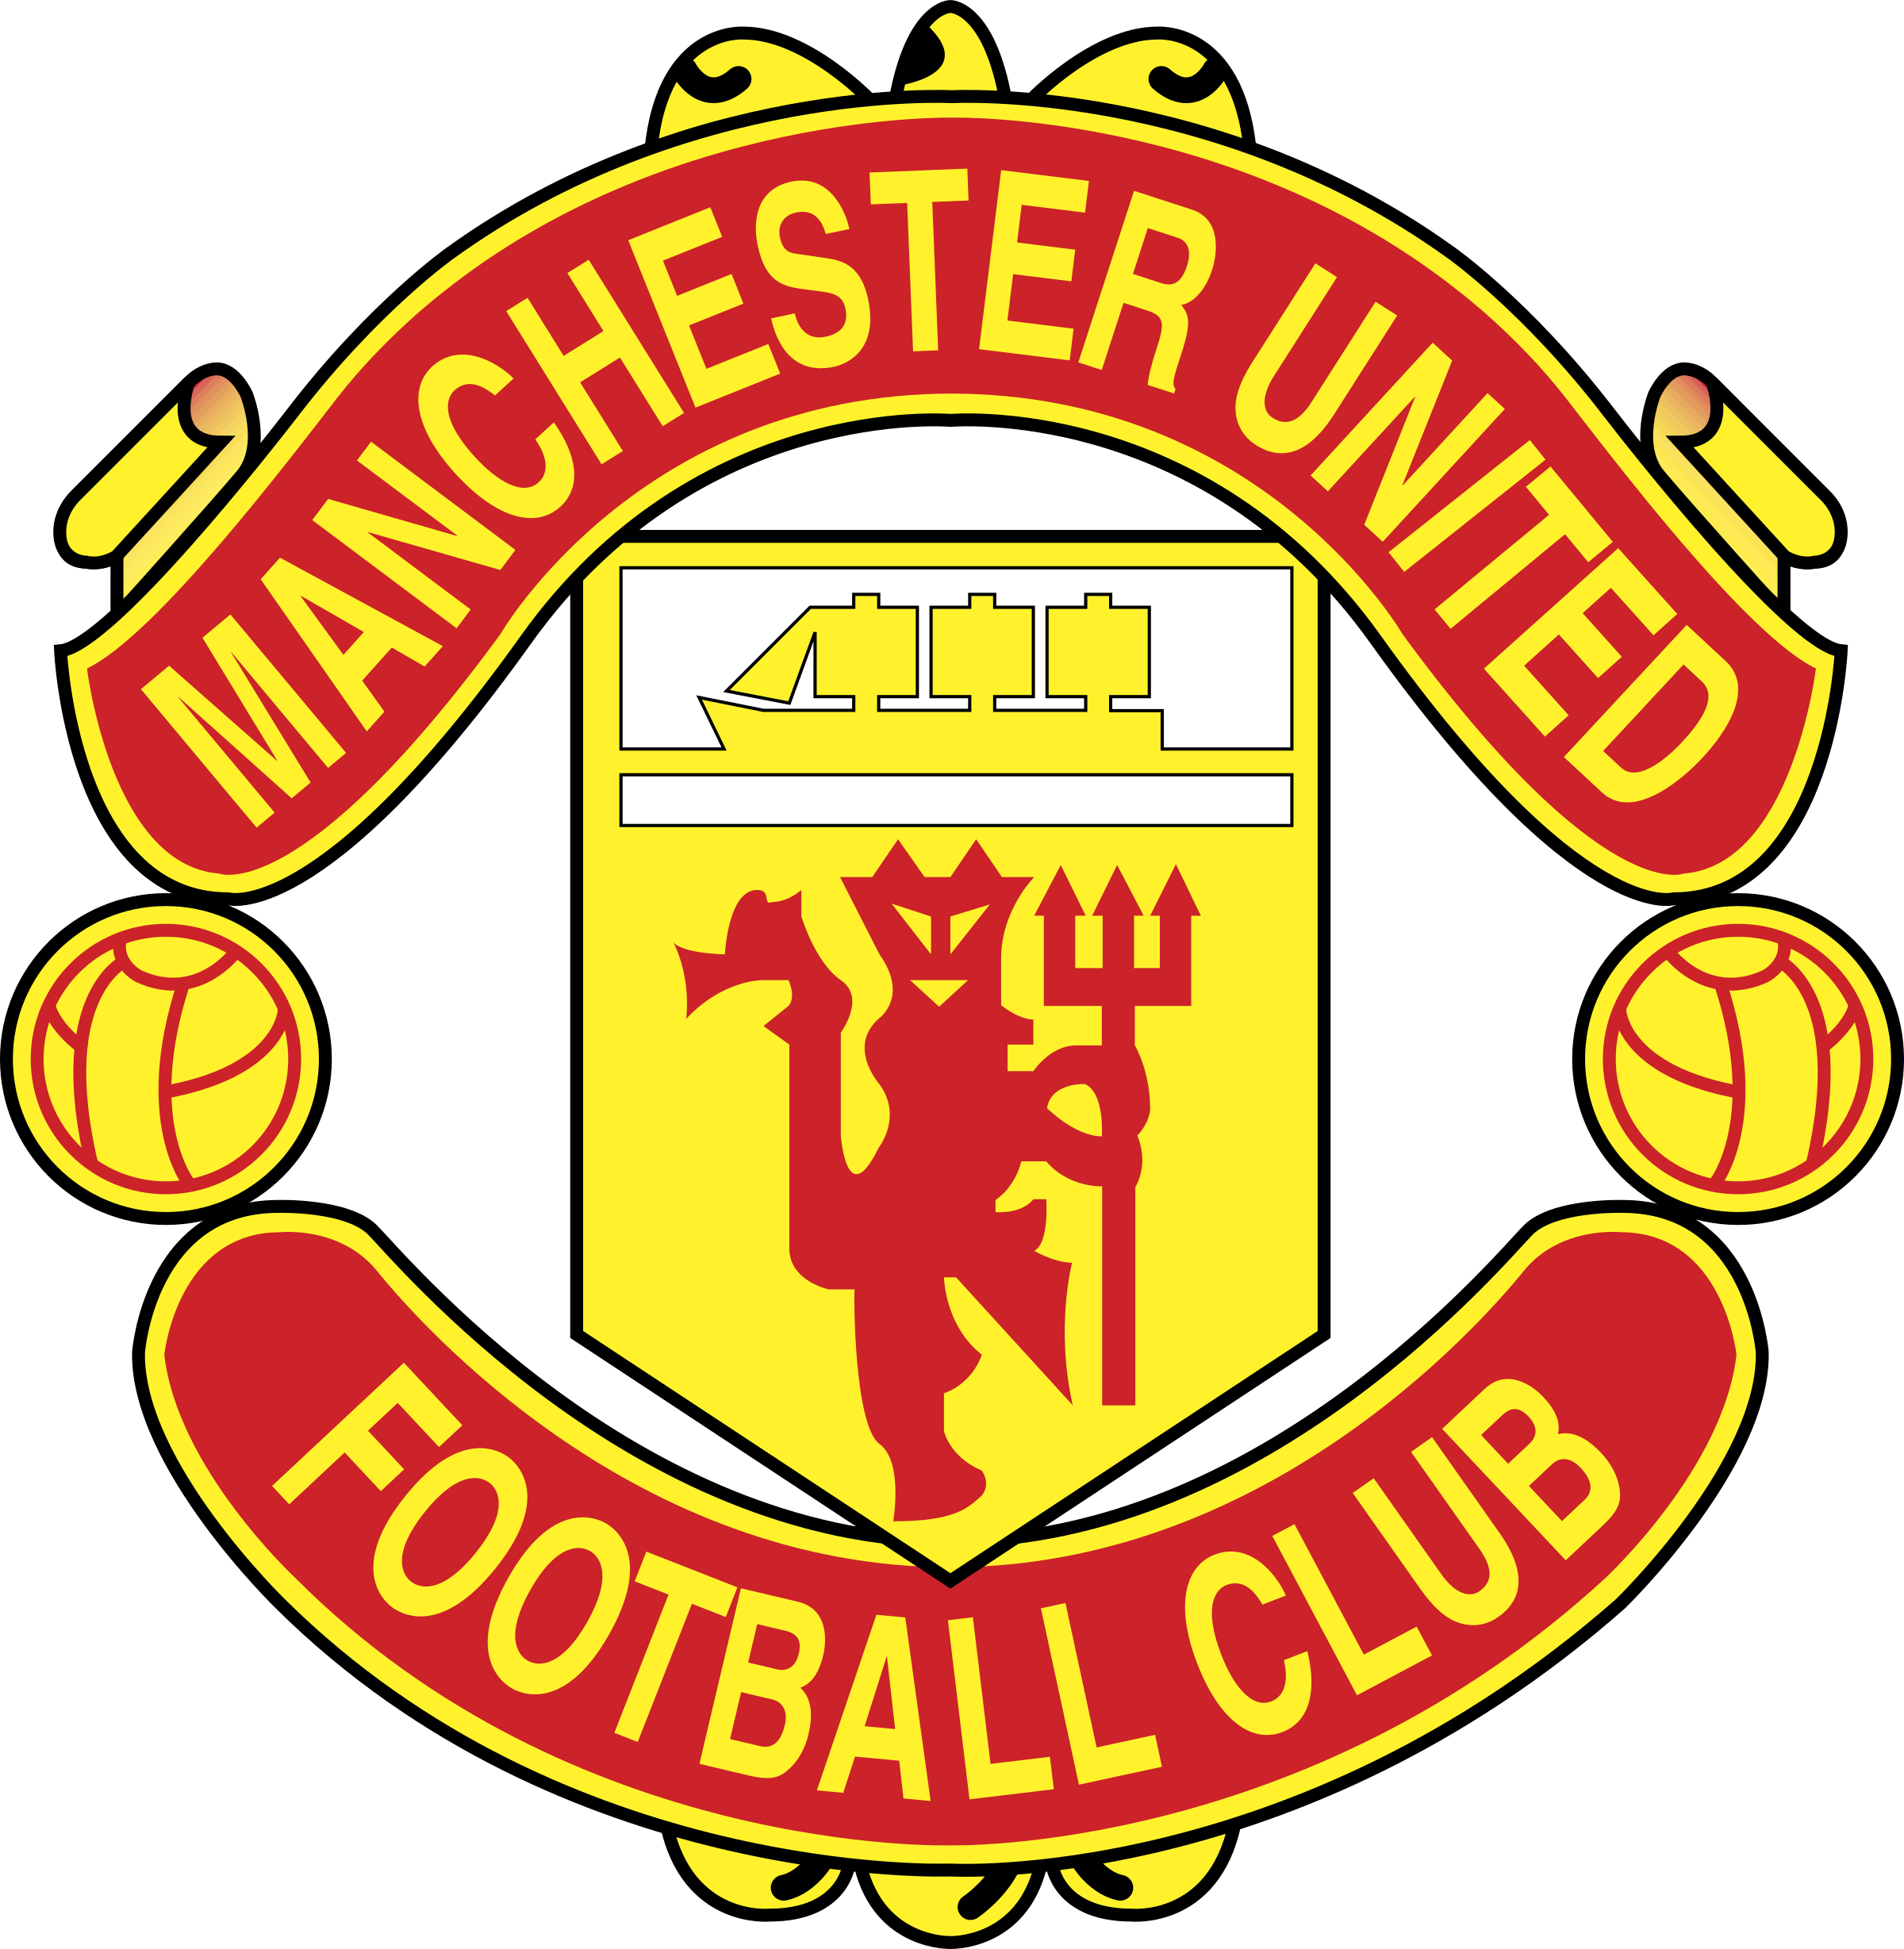 Soccerstarz Manchester United Fc png images